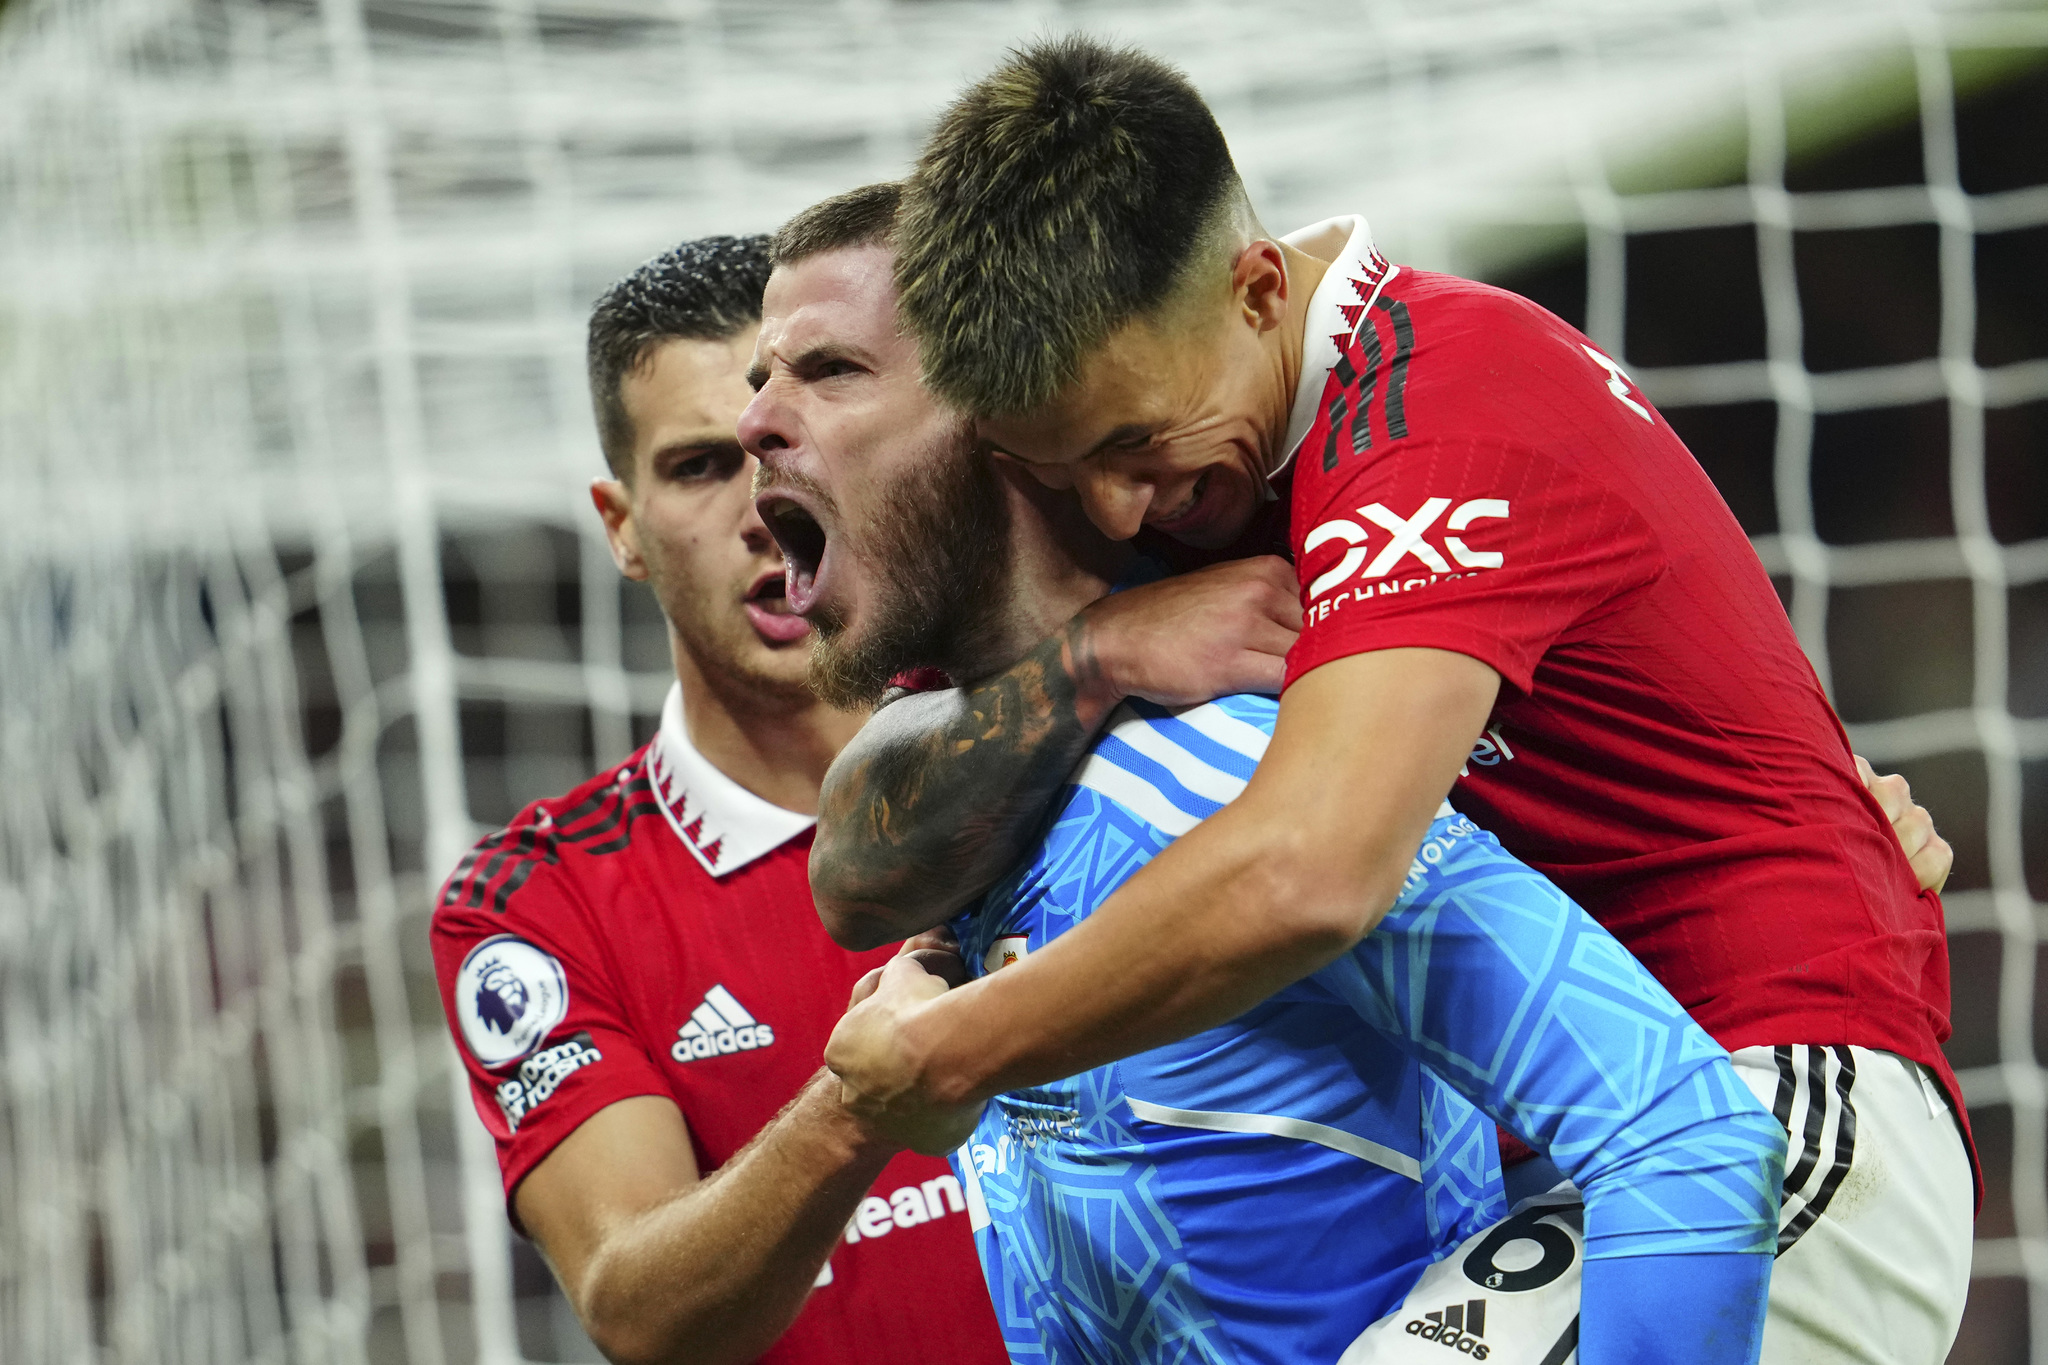 De Gea celebrates as Manchester United win